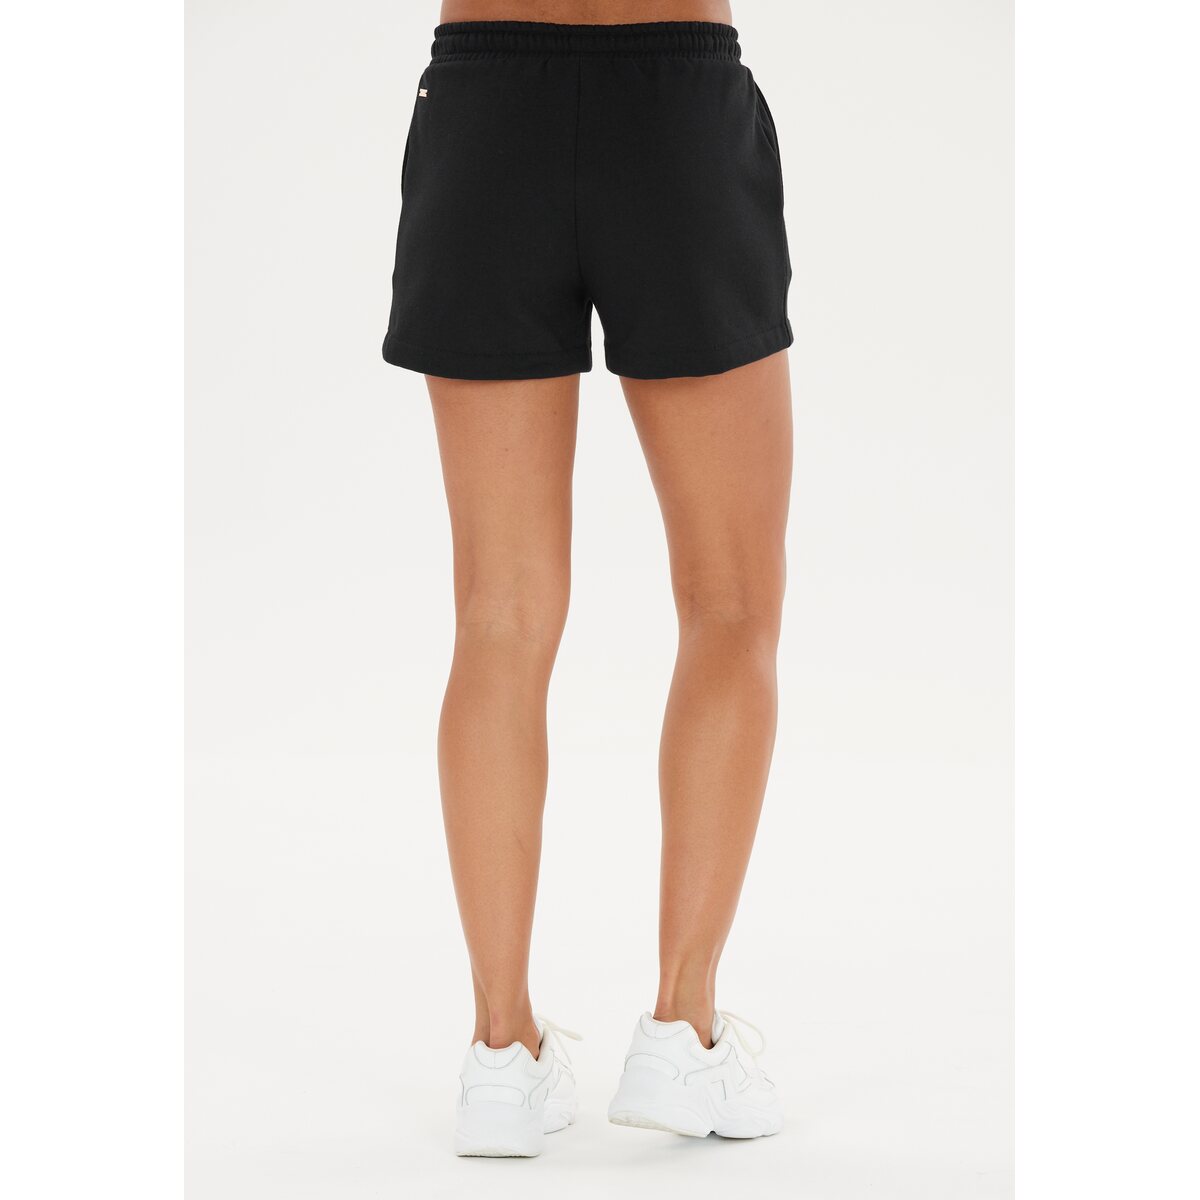 Athlecia Ruthie Womenswear Shorts - Black 4 Shaws Department Stores